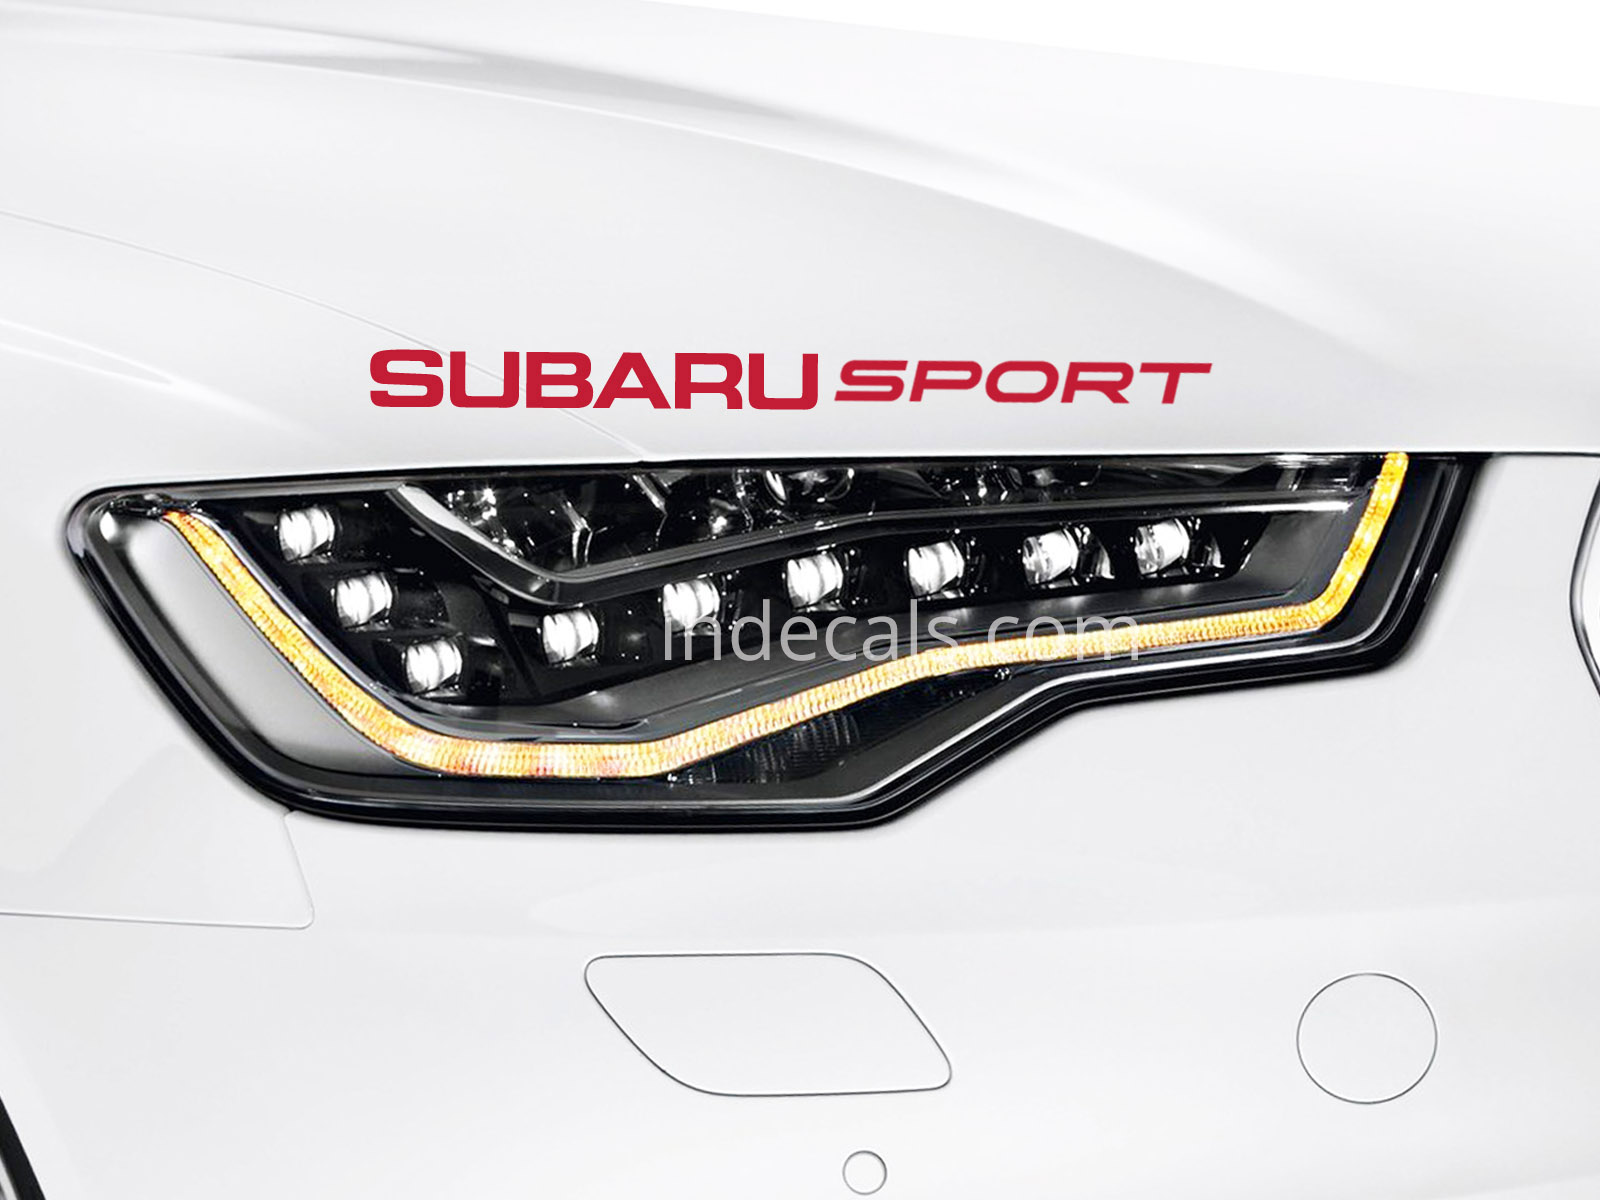 1 x Subaru Sport Sticker - Red